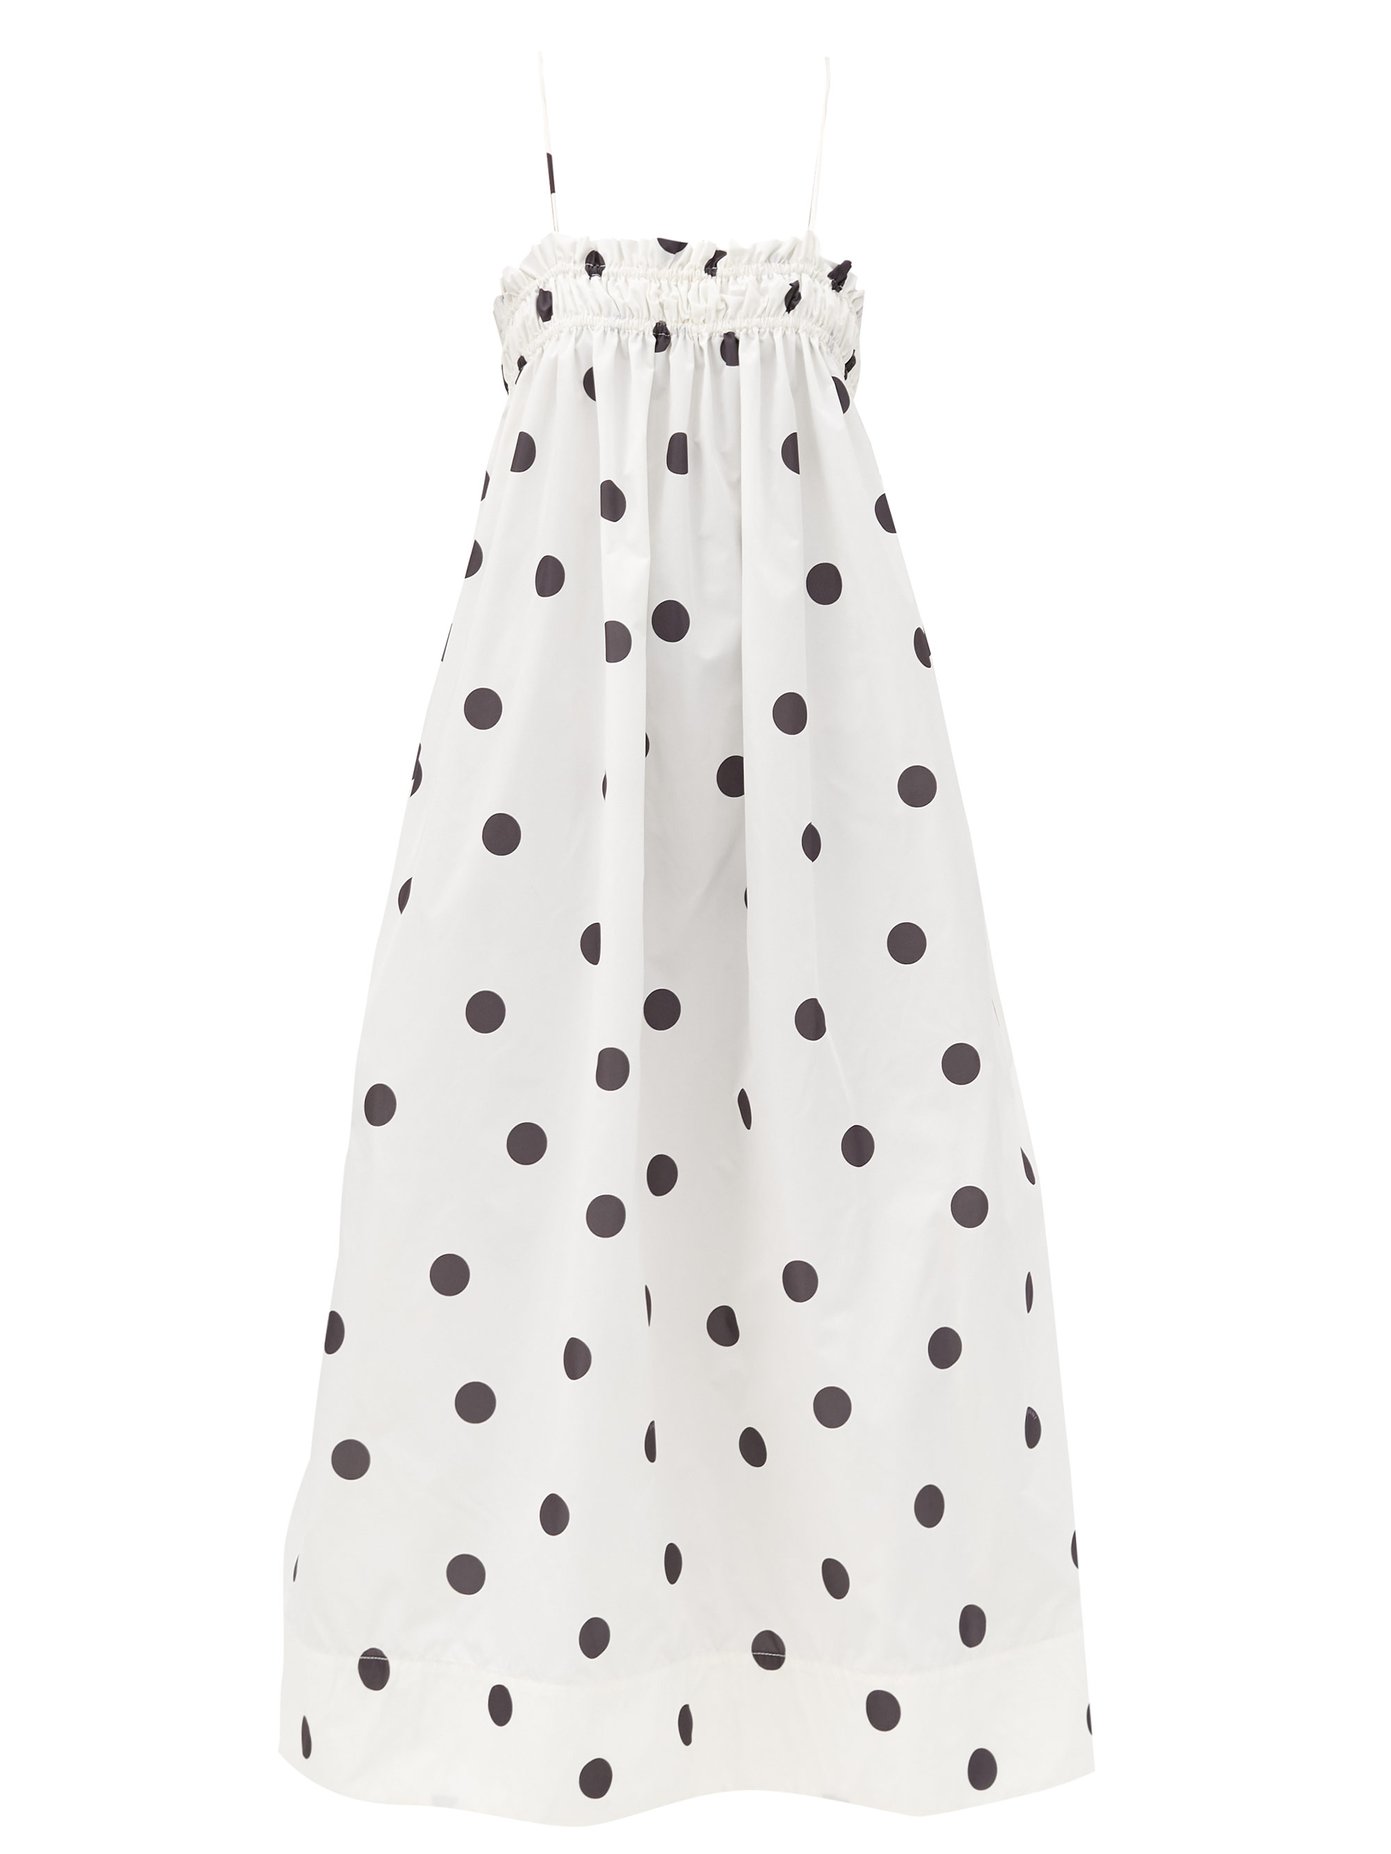 grey and white polka dot dress